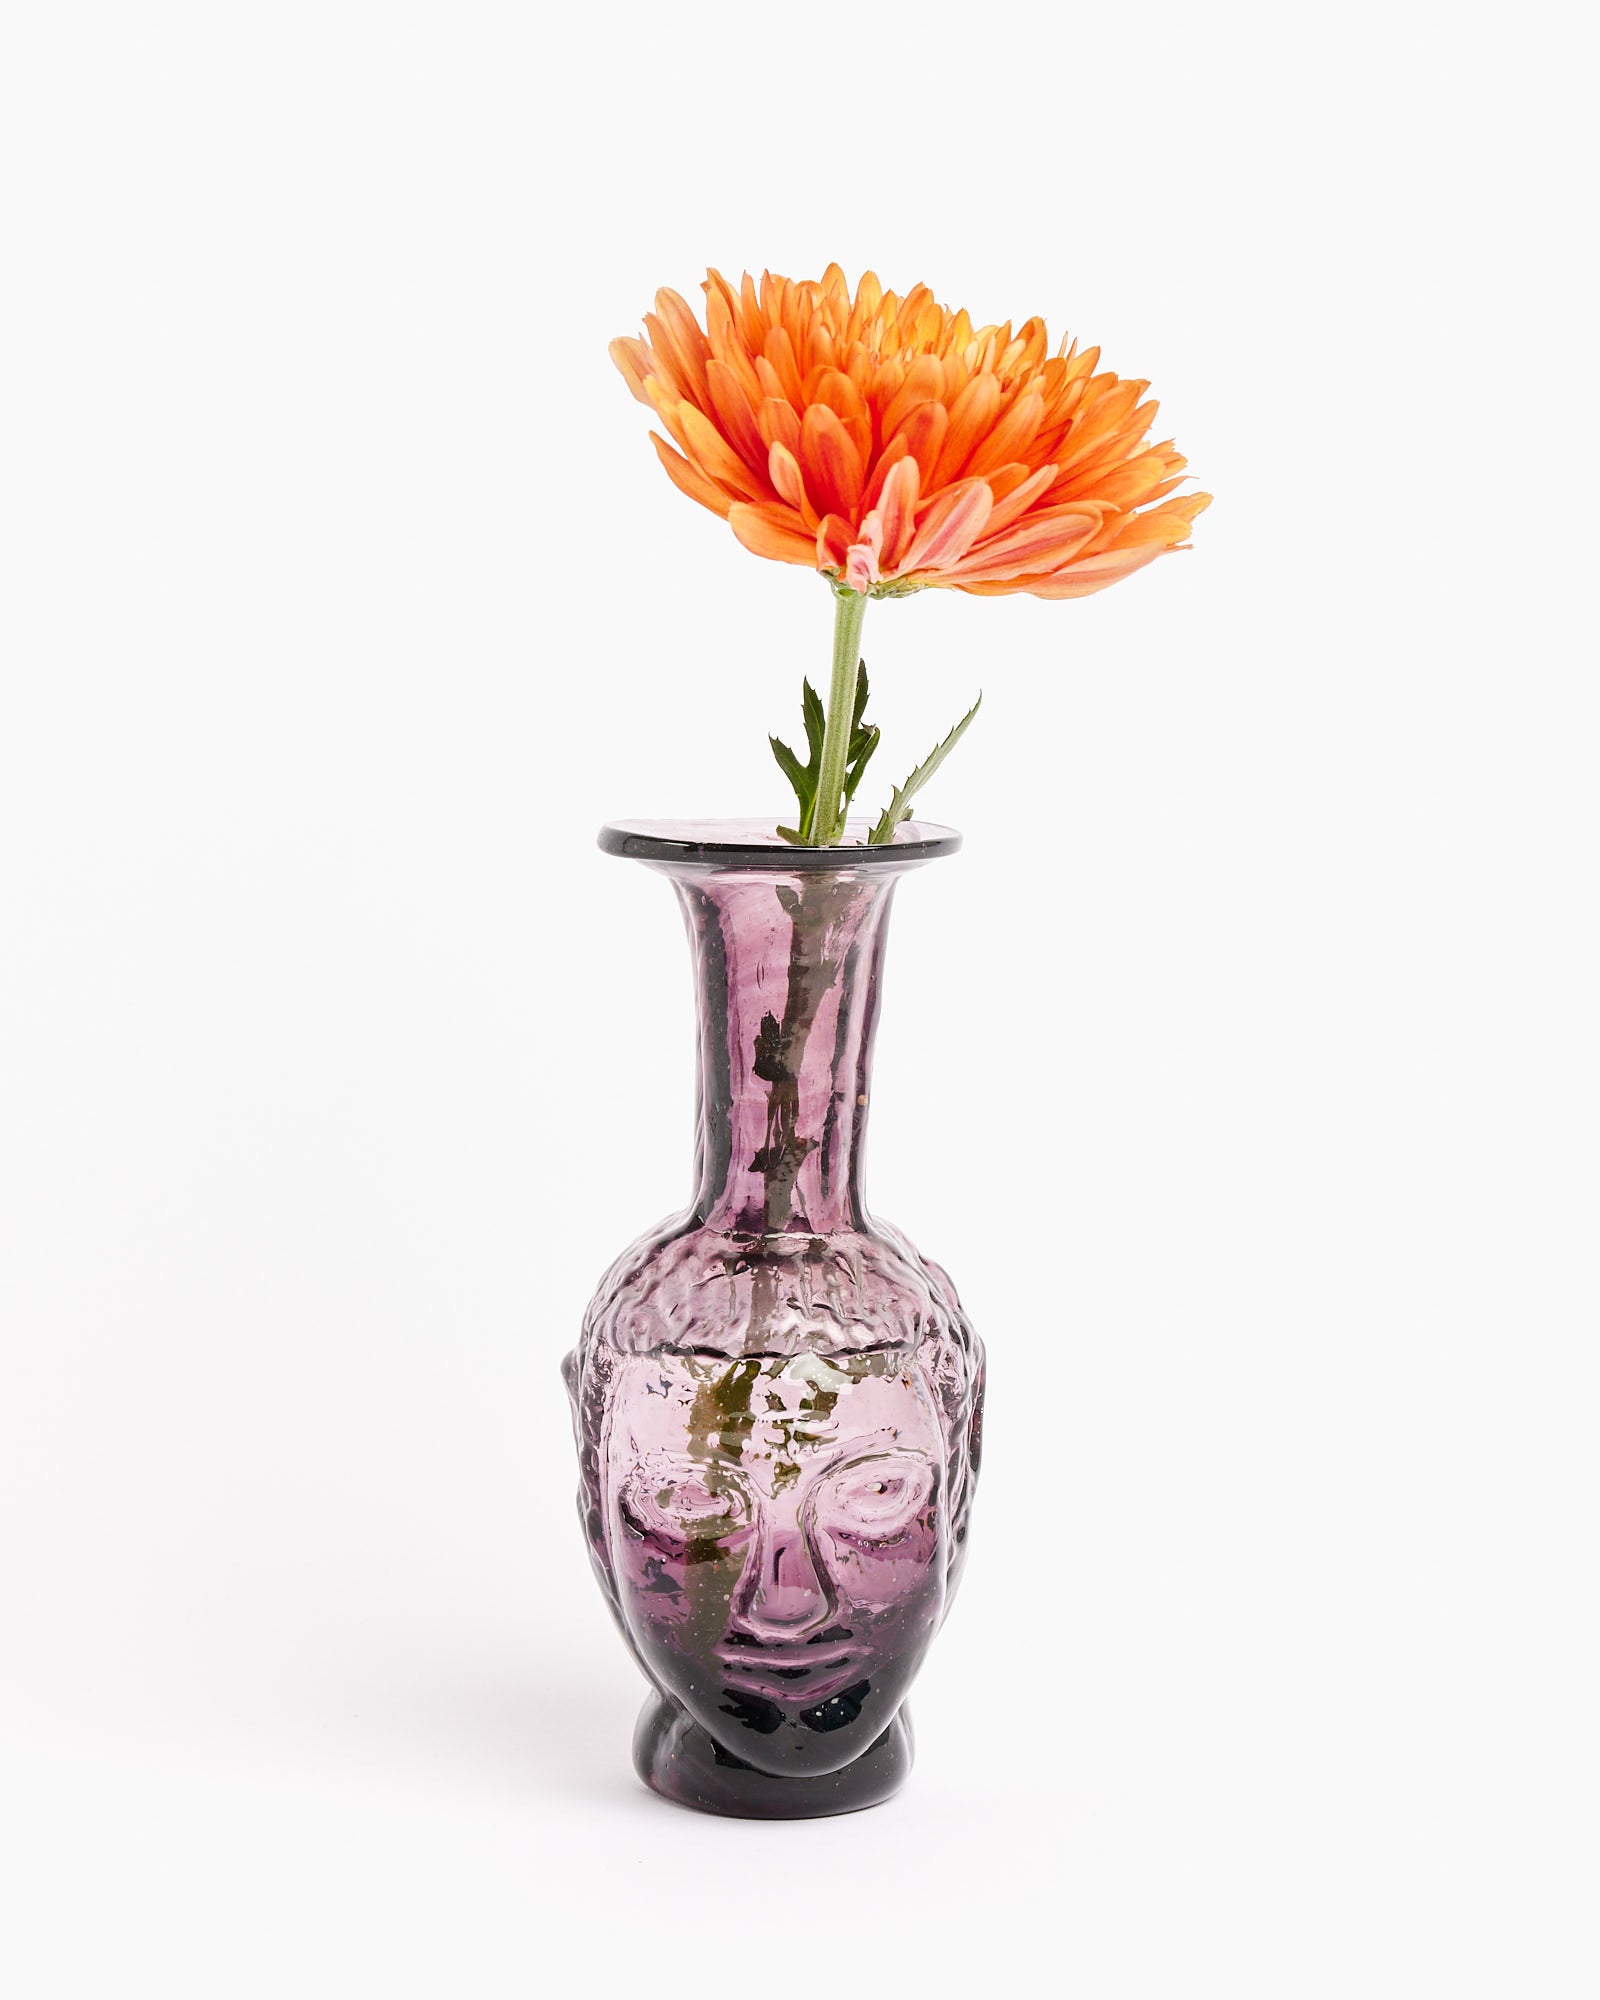 La Vase Tete in Purple